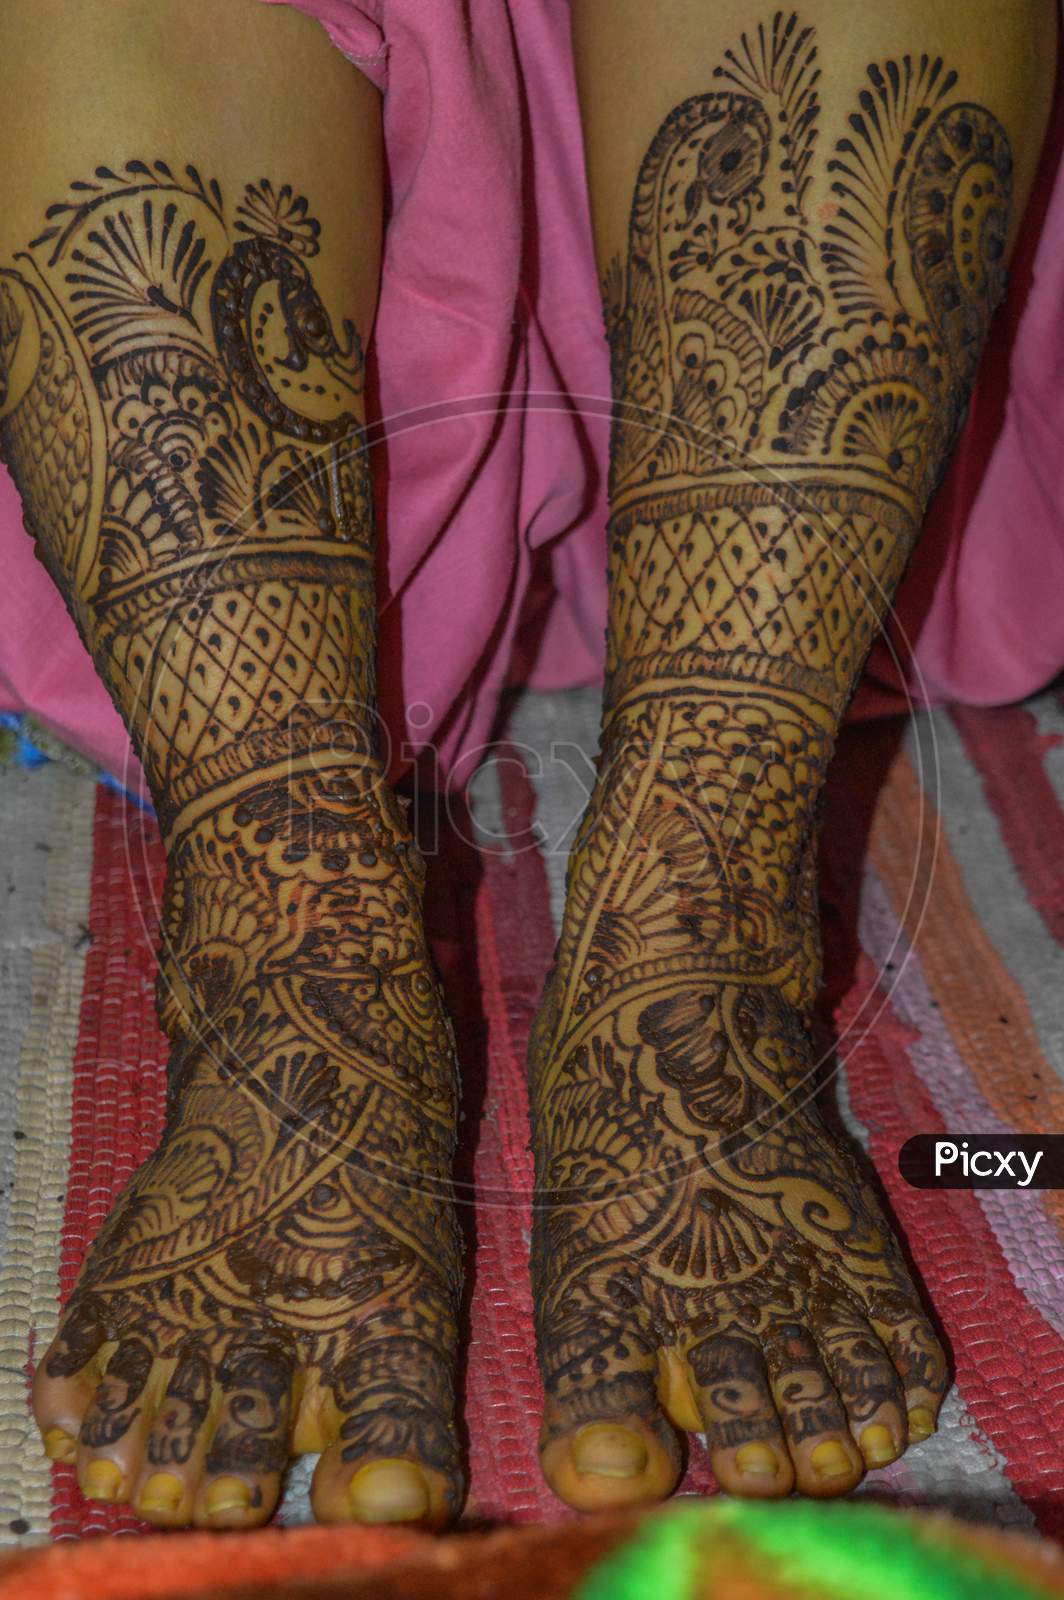 A Lady Feet With Indian Heena Mehandi In Indian Weddings.